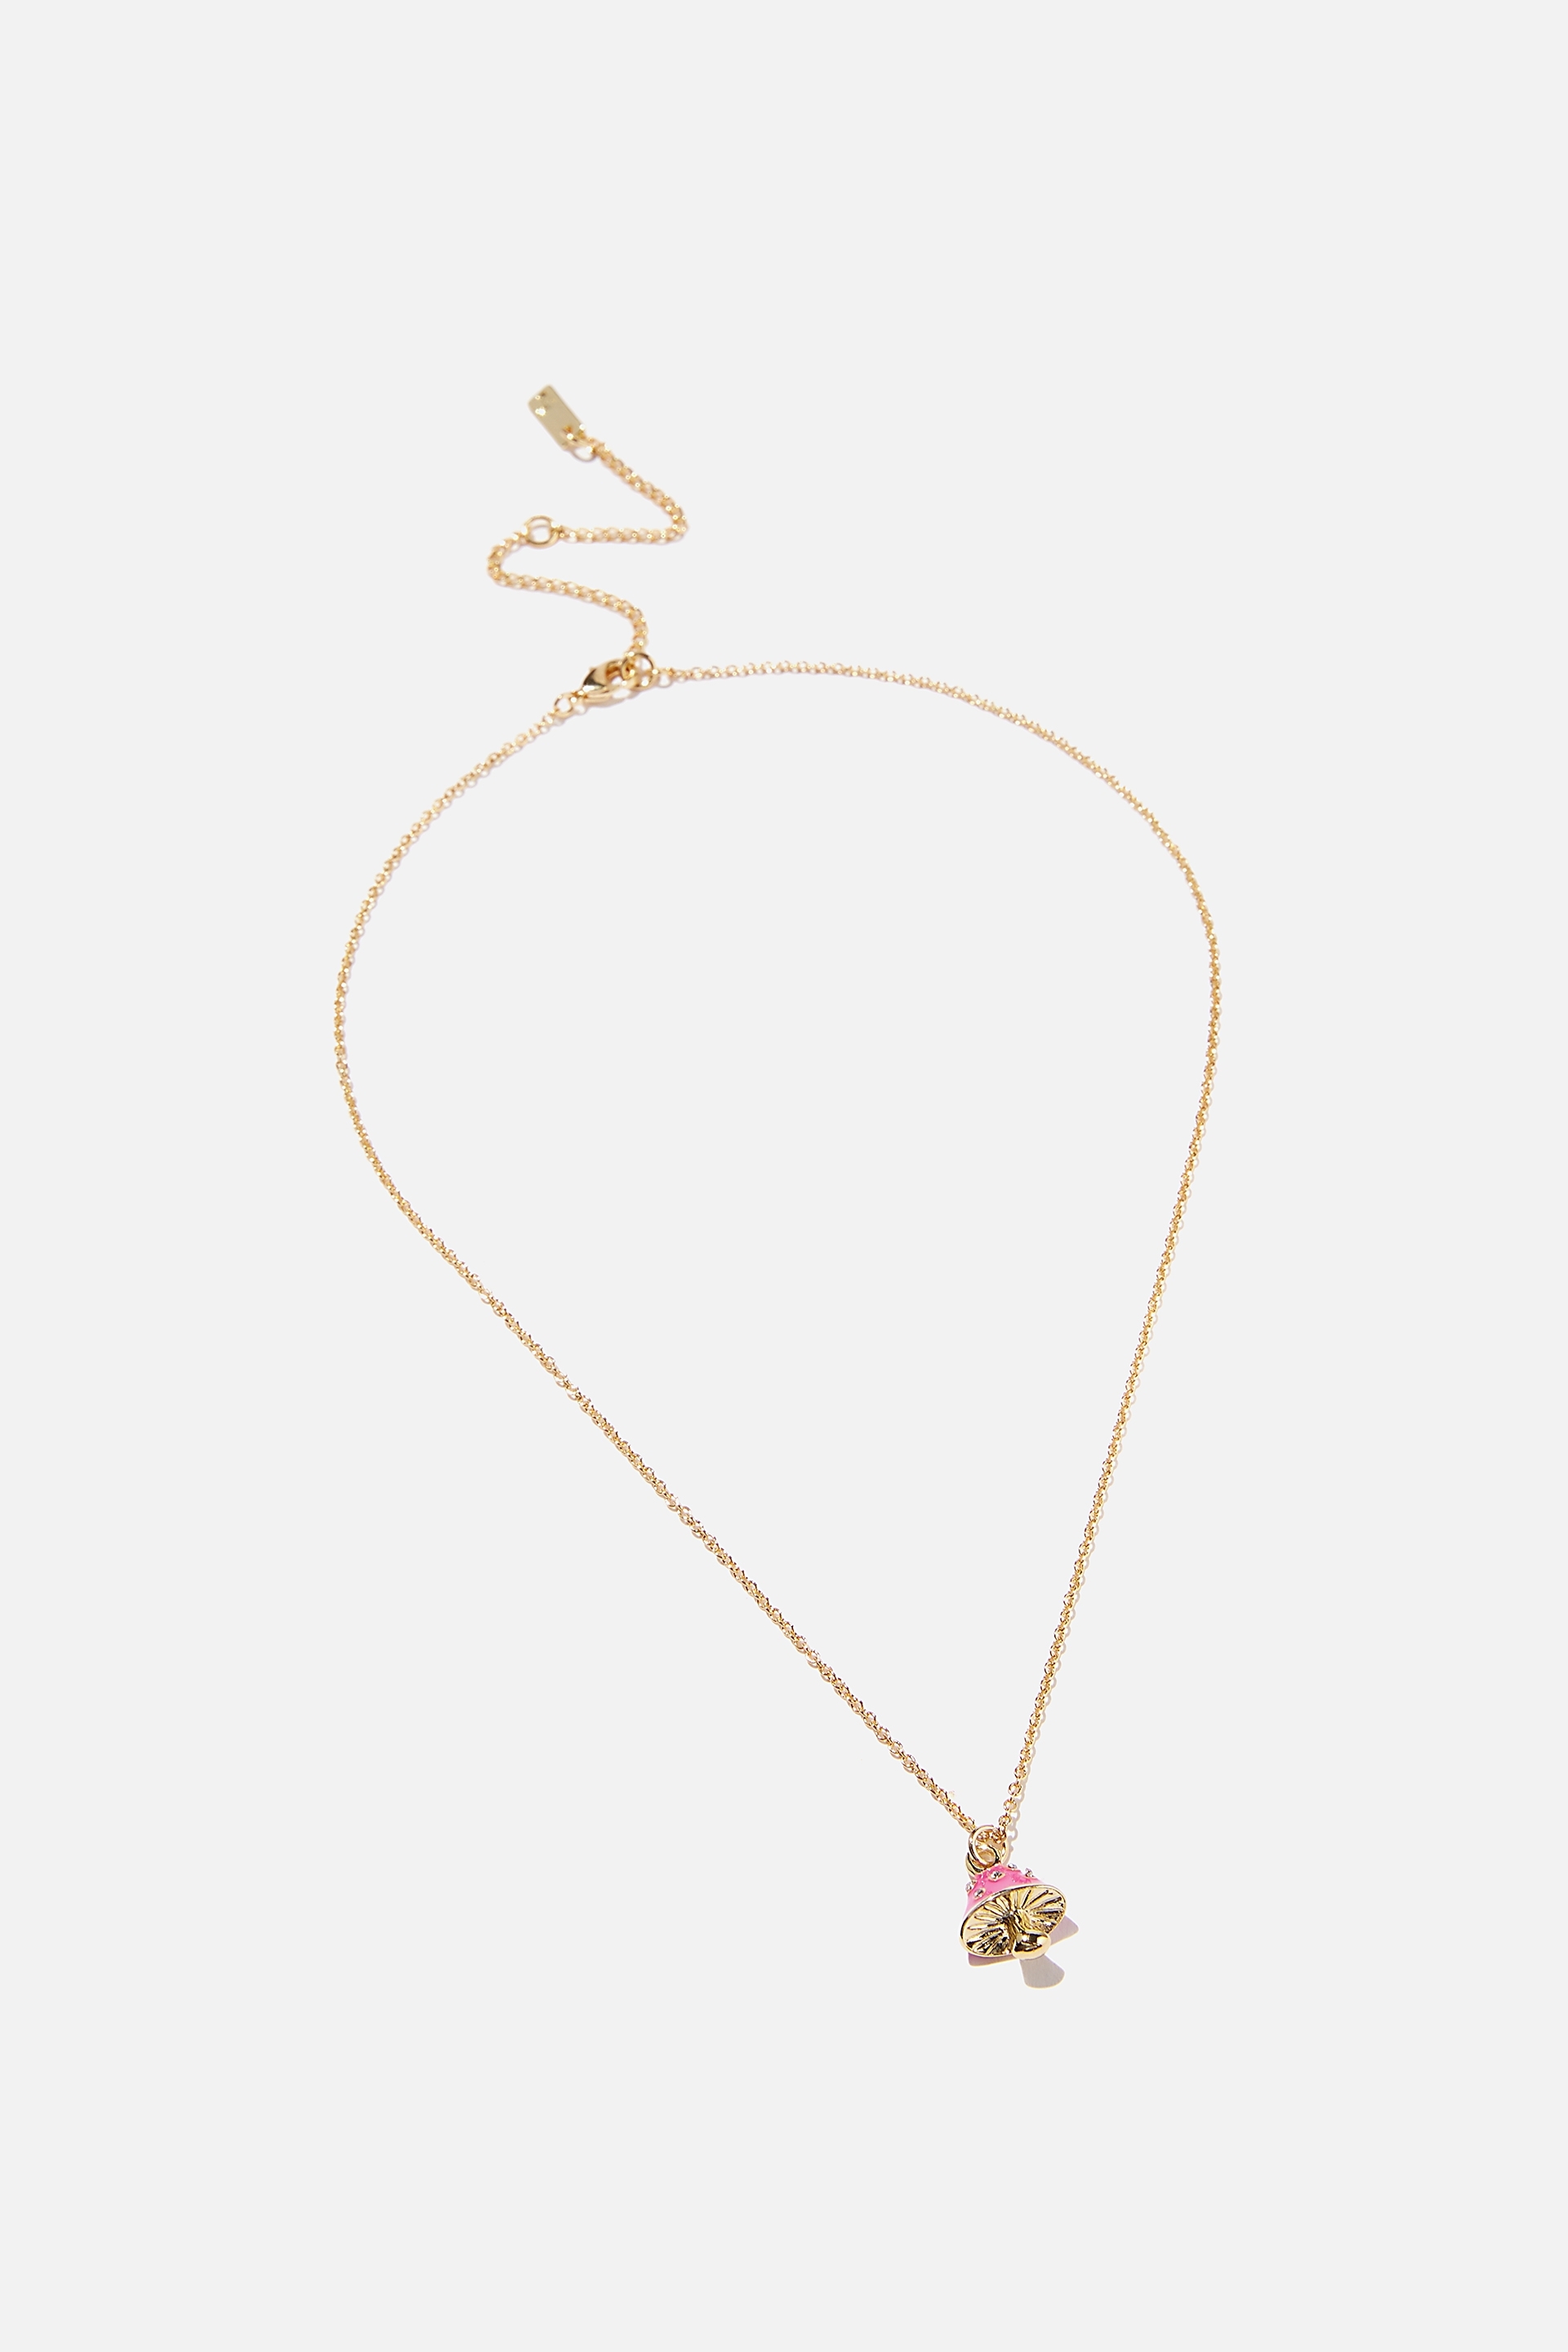 Rubi - Premium Pendant Necklace - Gold plated pink mushroom